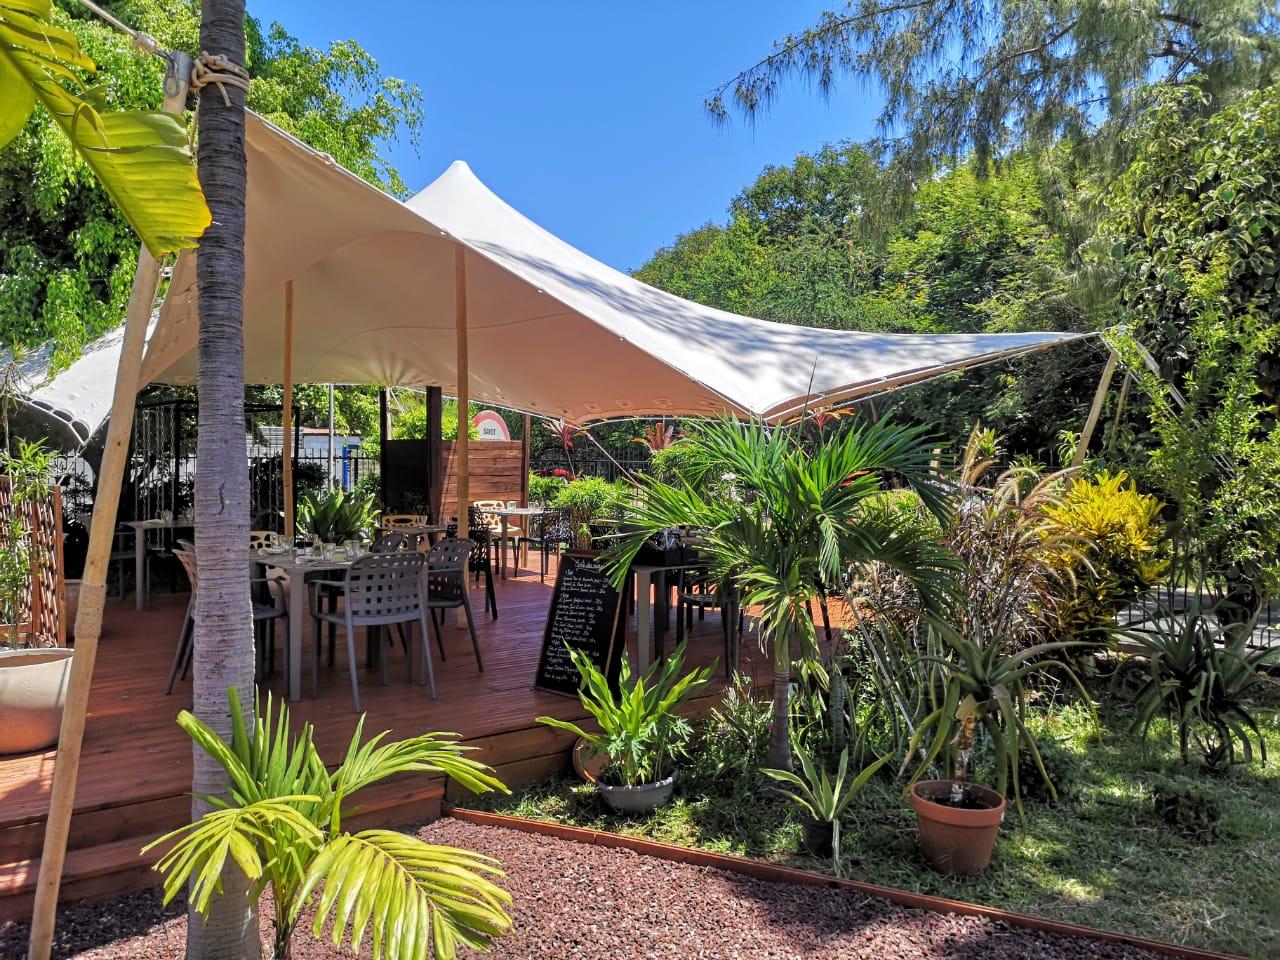 Restaurant "vert" au sein d'un jardin tropical cosy - La Saline